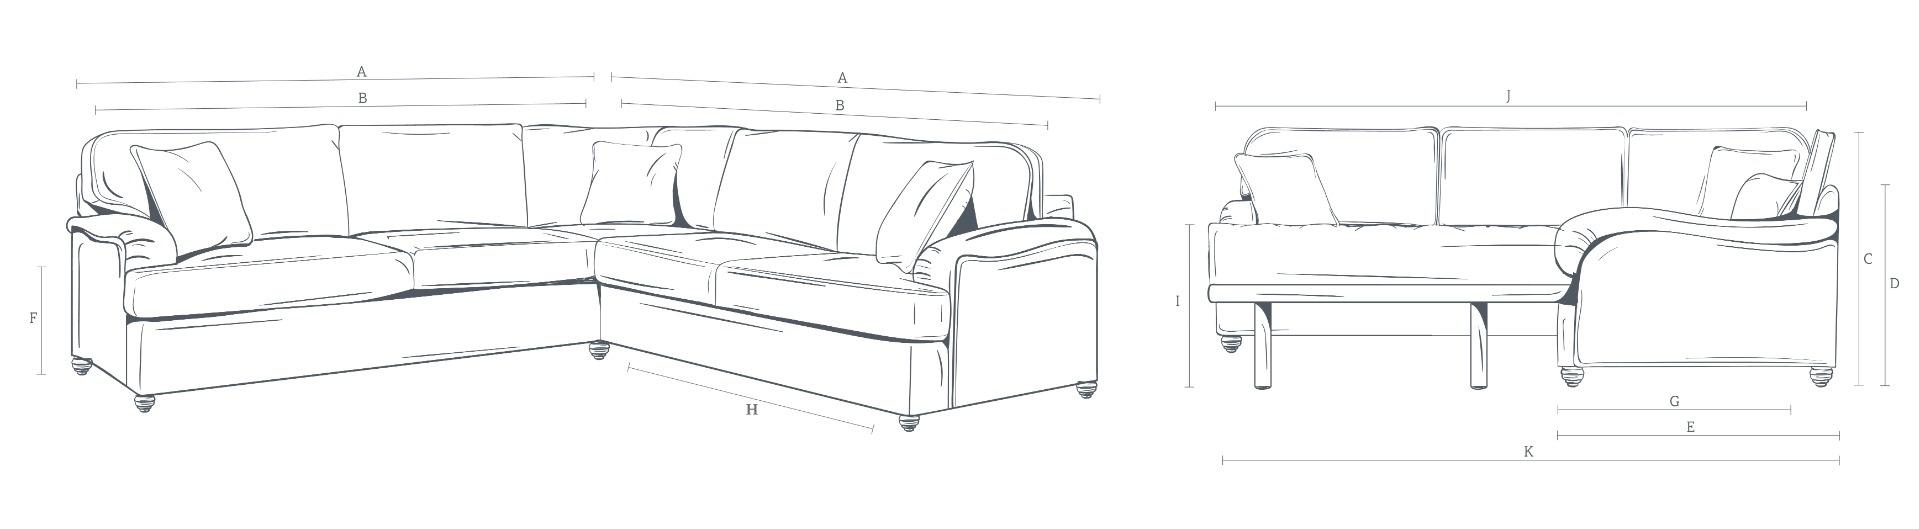 The Milbourne Corner Sofa Bed 7 Seater